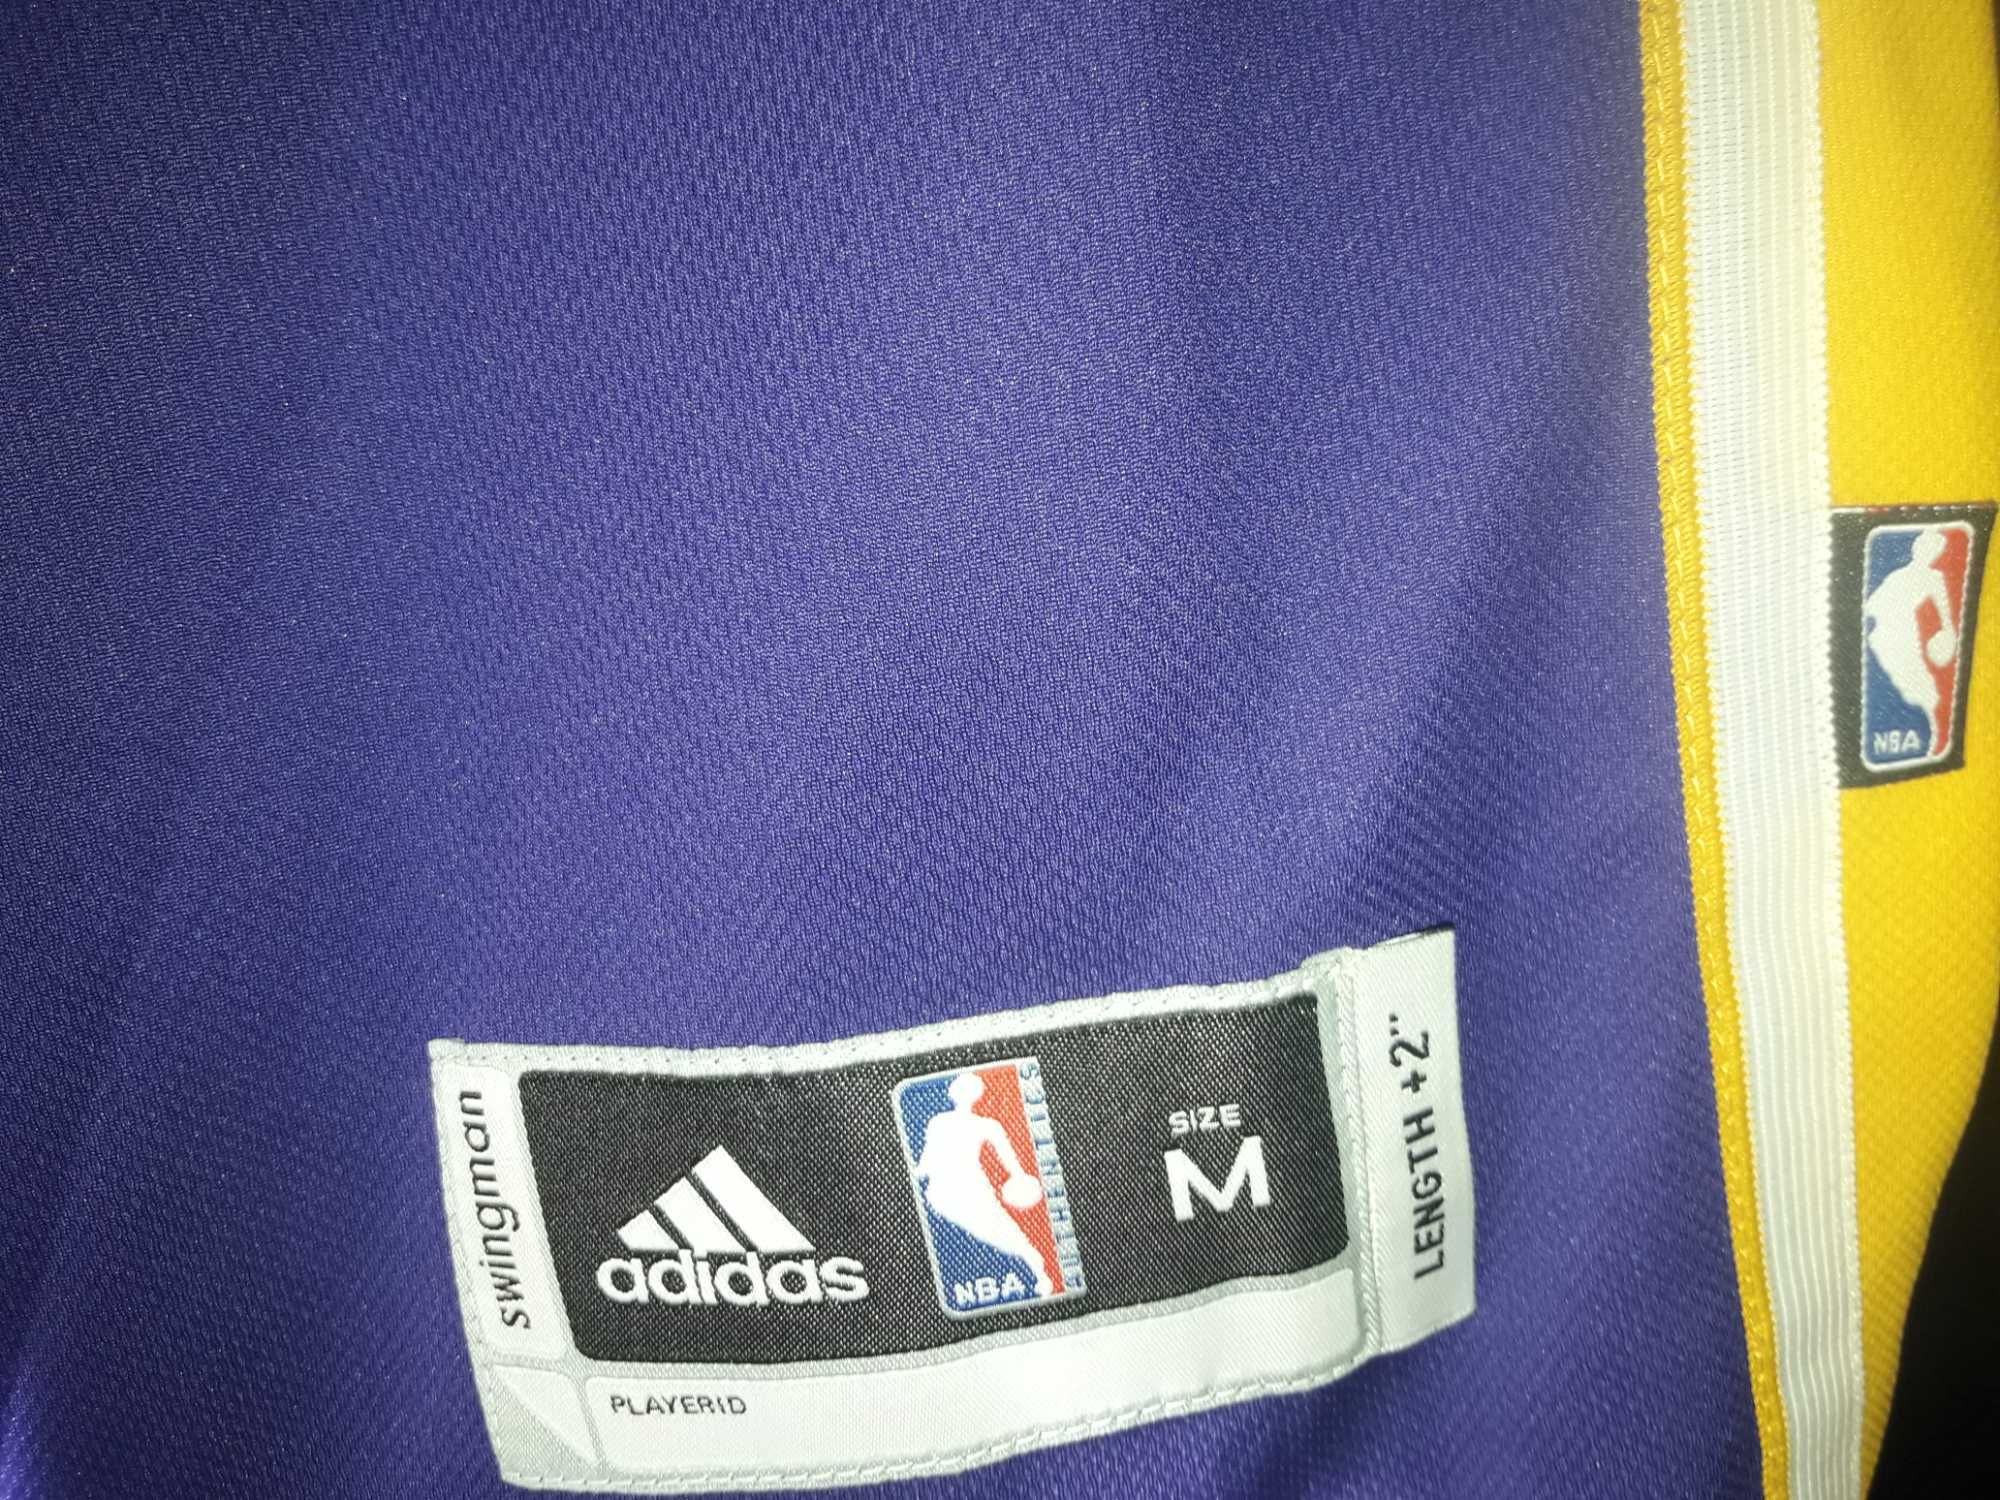 koszulka NBA Los Angeles Lakers Kobe Bryant 24 (nowa)